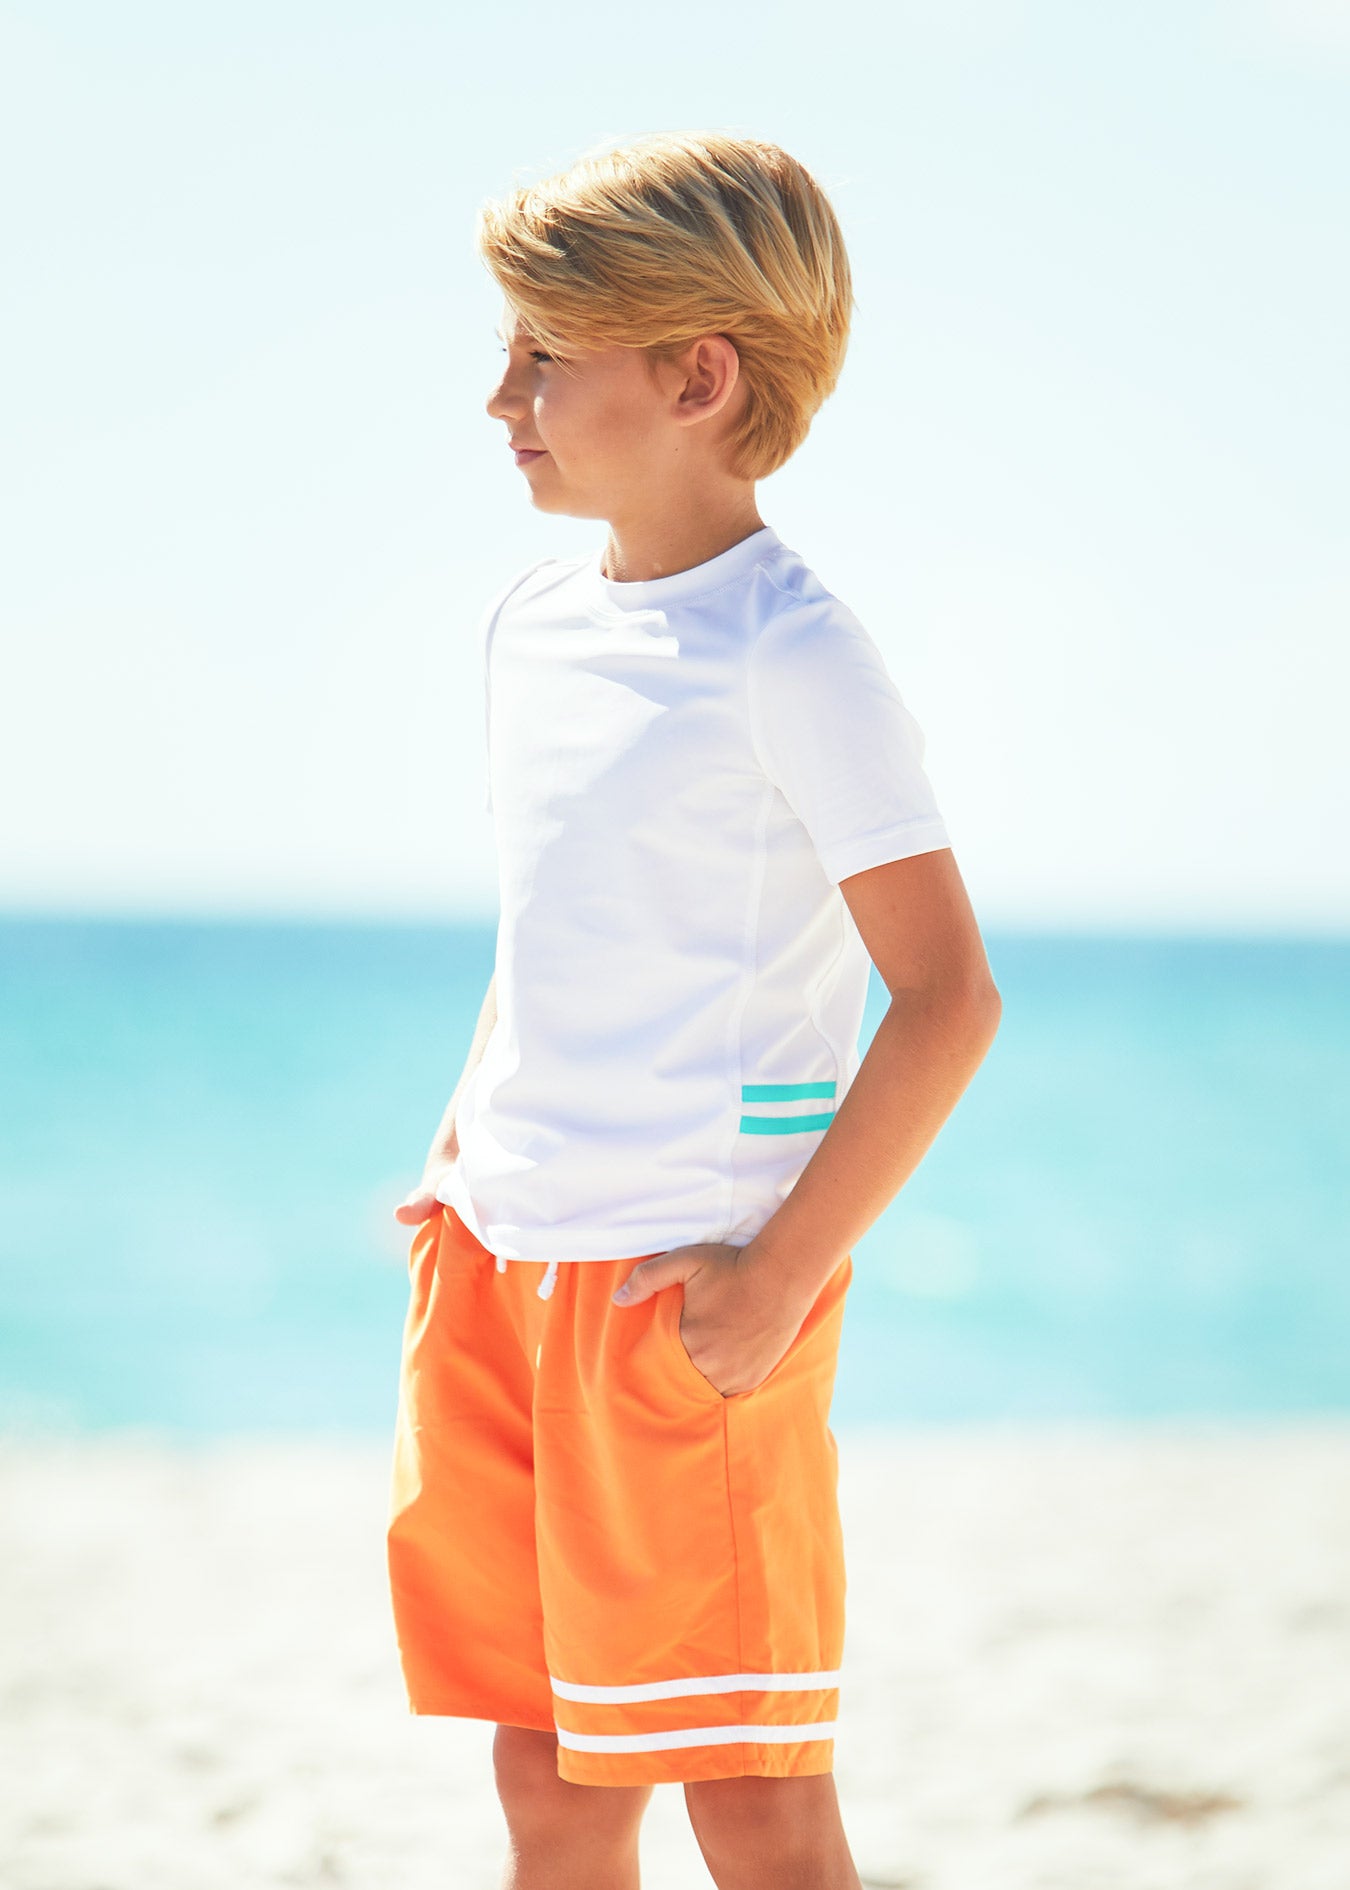 Boy on beach wearing Boys White Short Sleeve Rashguard with Boys Tangerine Swim trunks